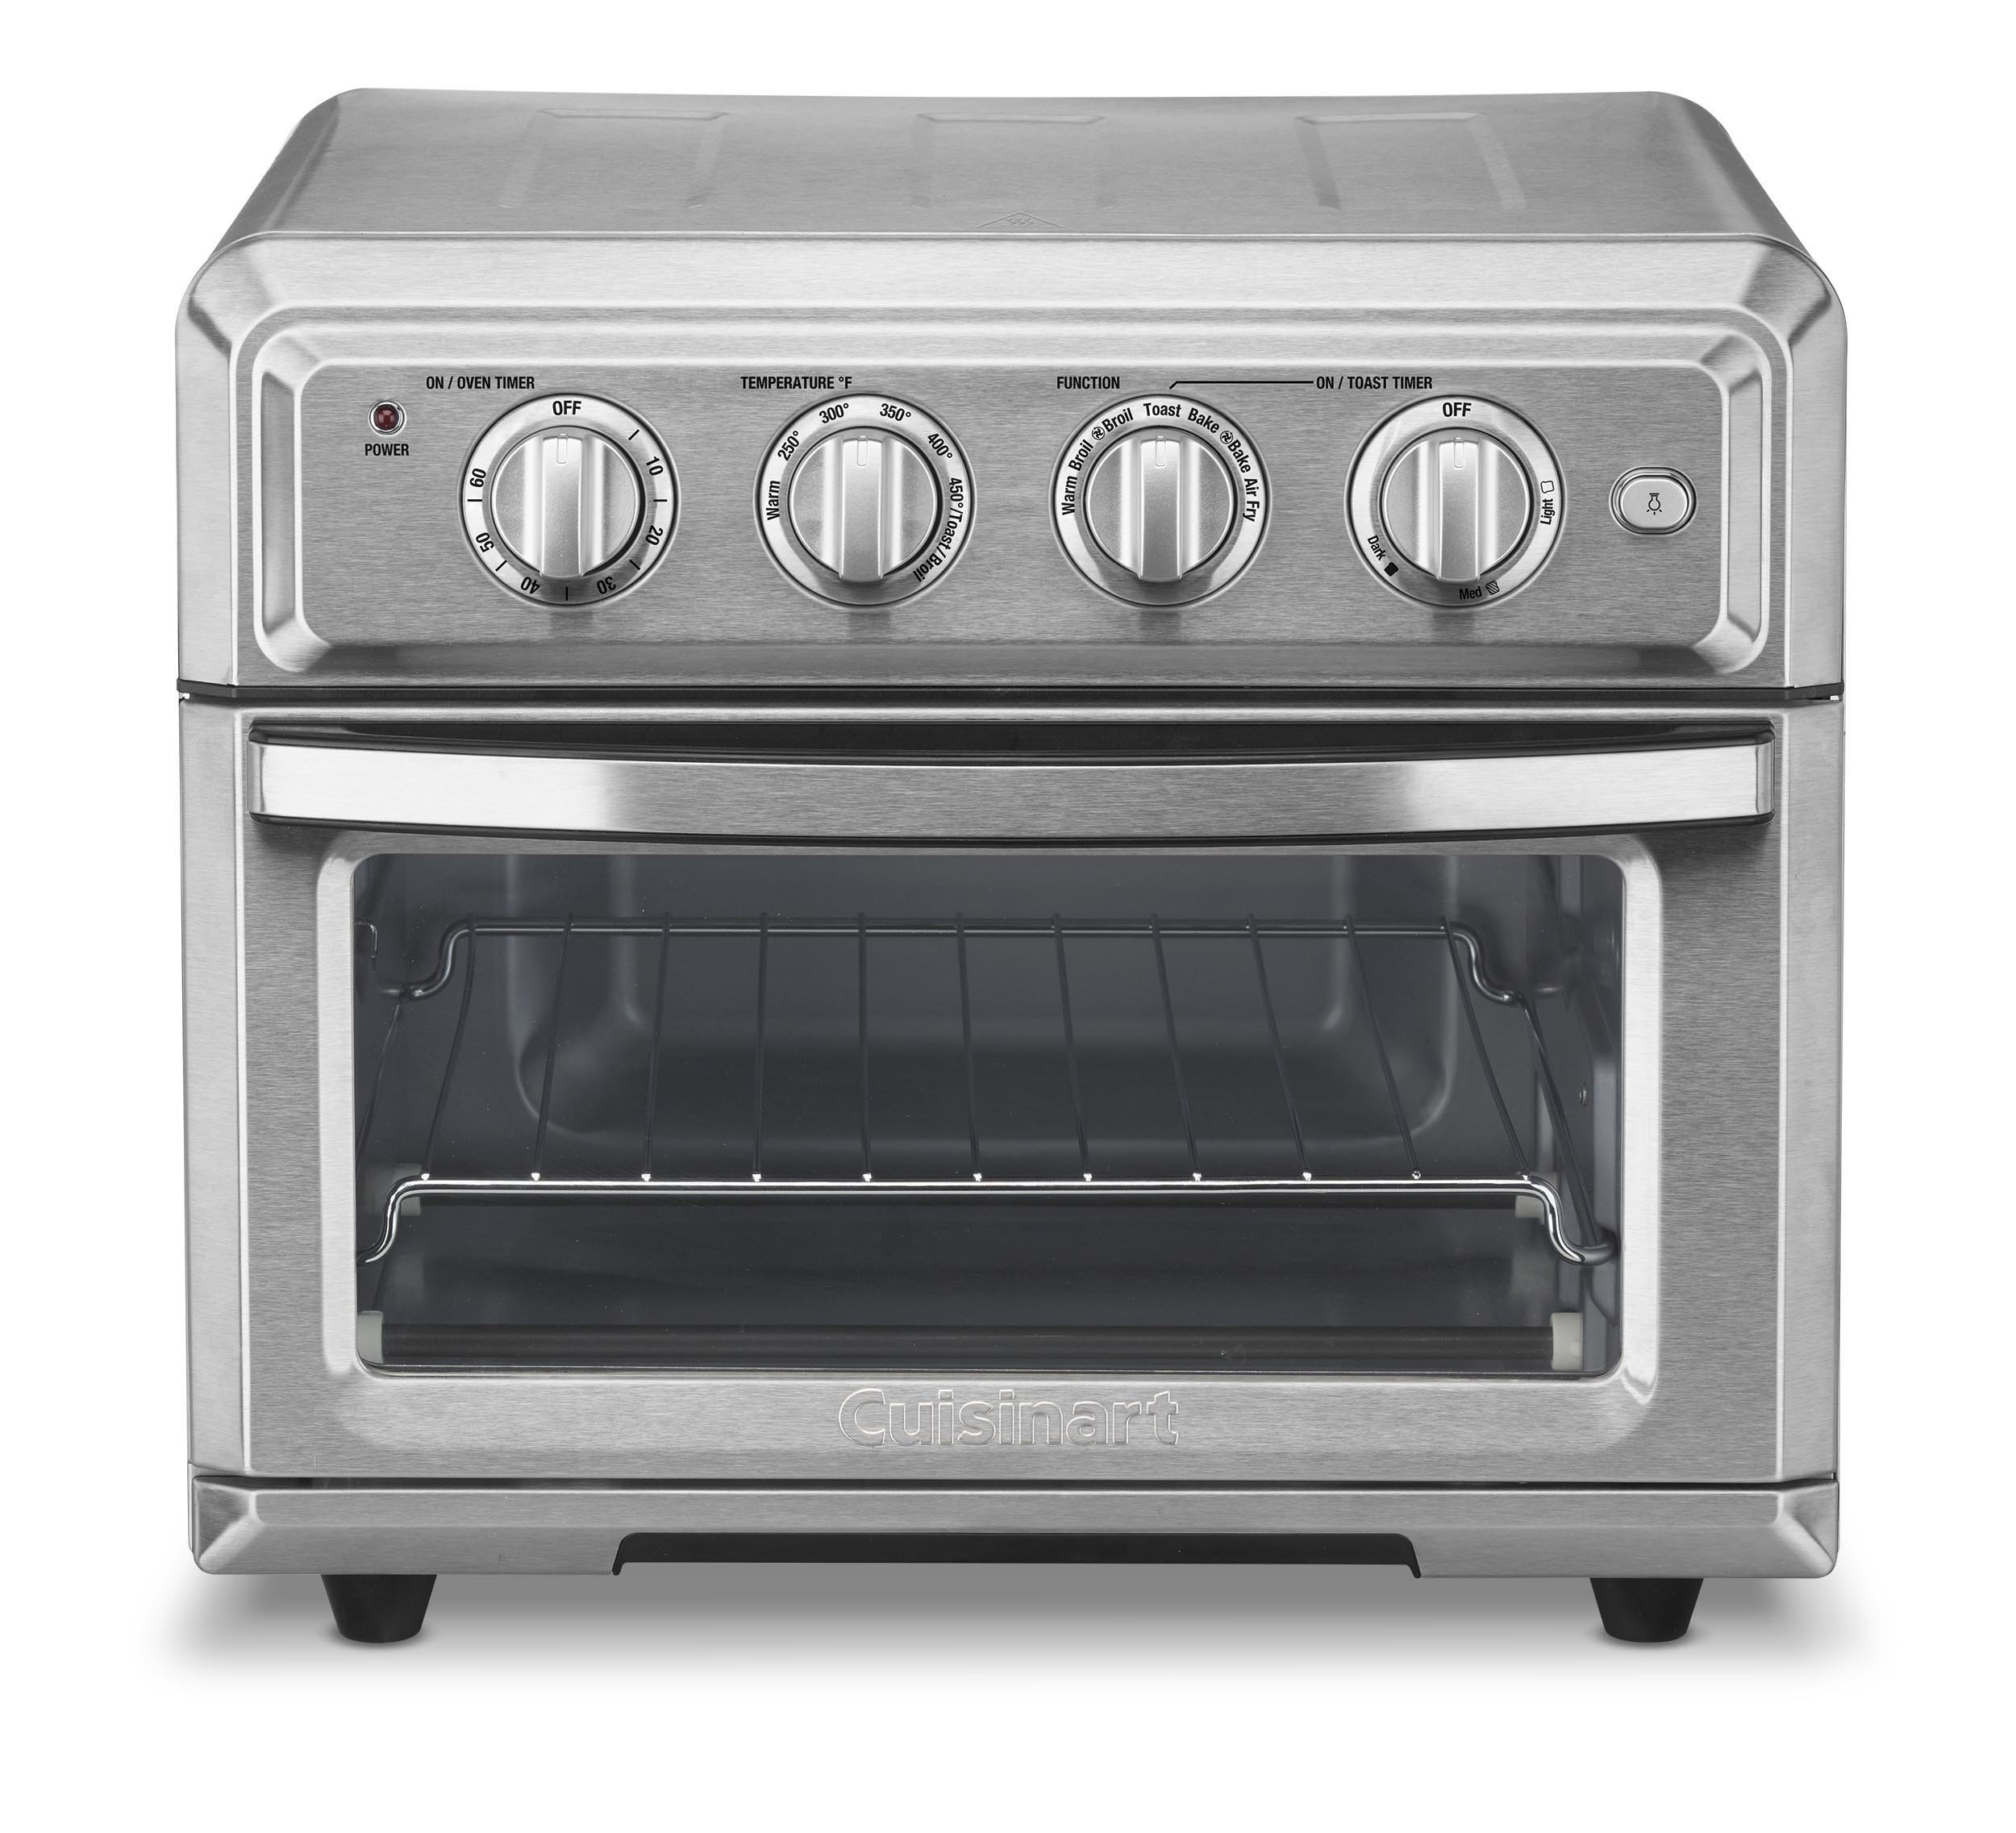 fryer oven toaster air cuisinart cu ft wayfair kitchen tabletop